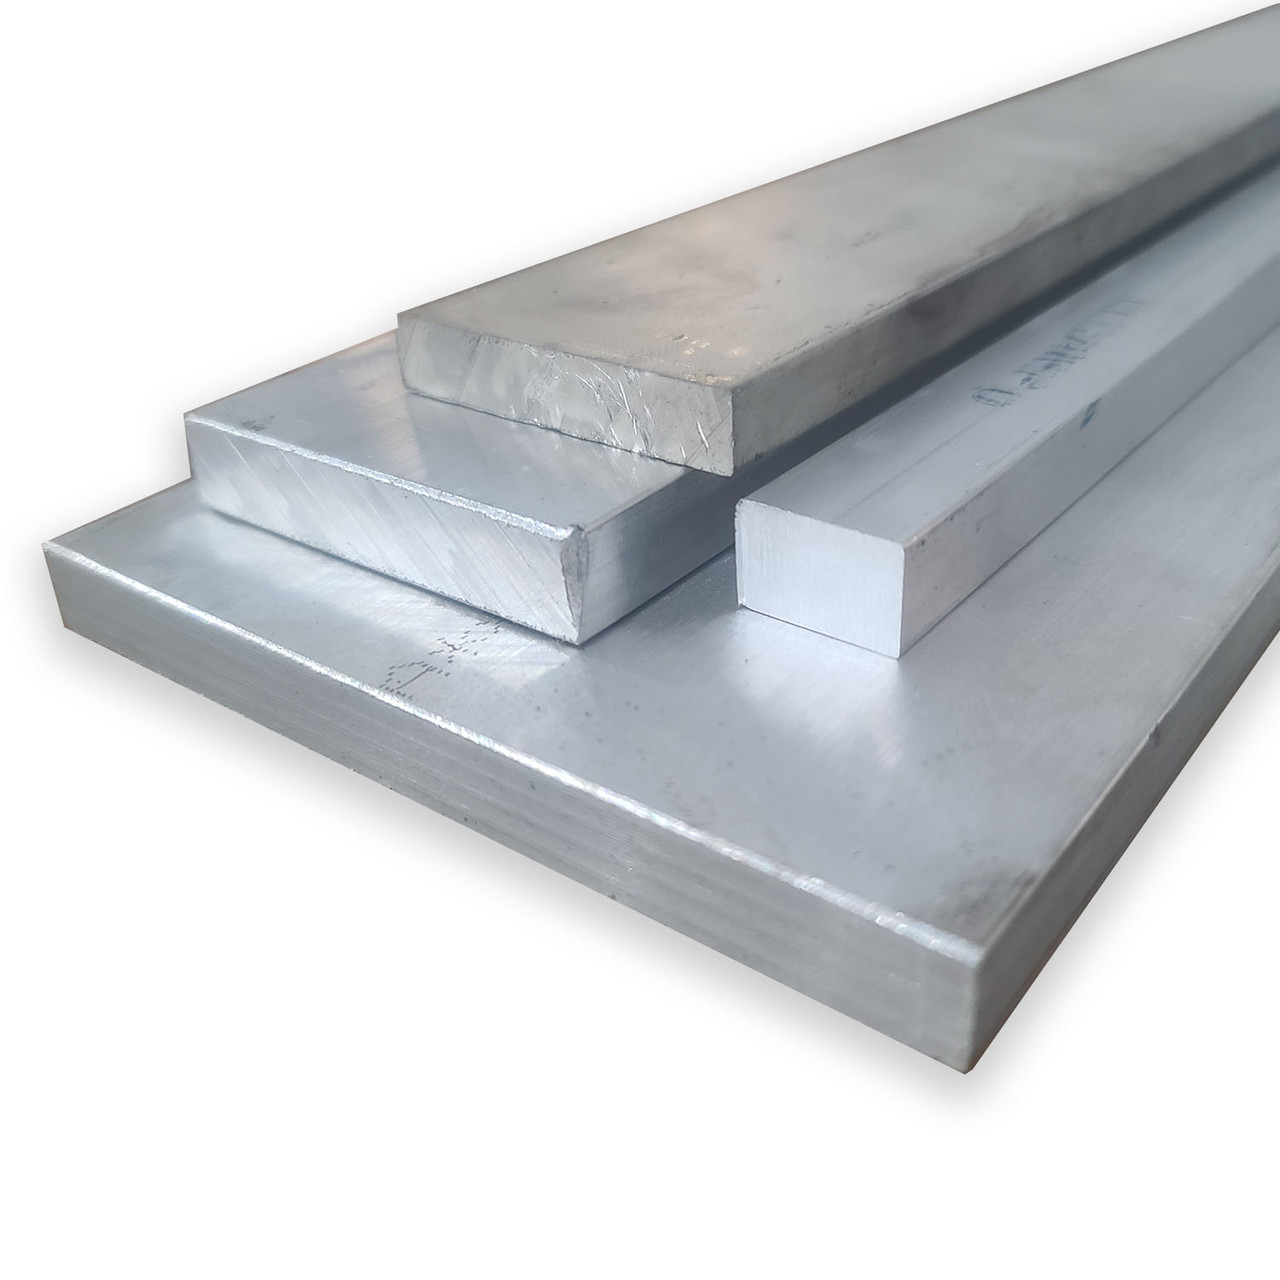 0.250" x 1" x 10" (3 Pack), 2024-T4 Aluminum Flat Bar